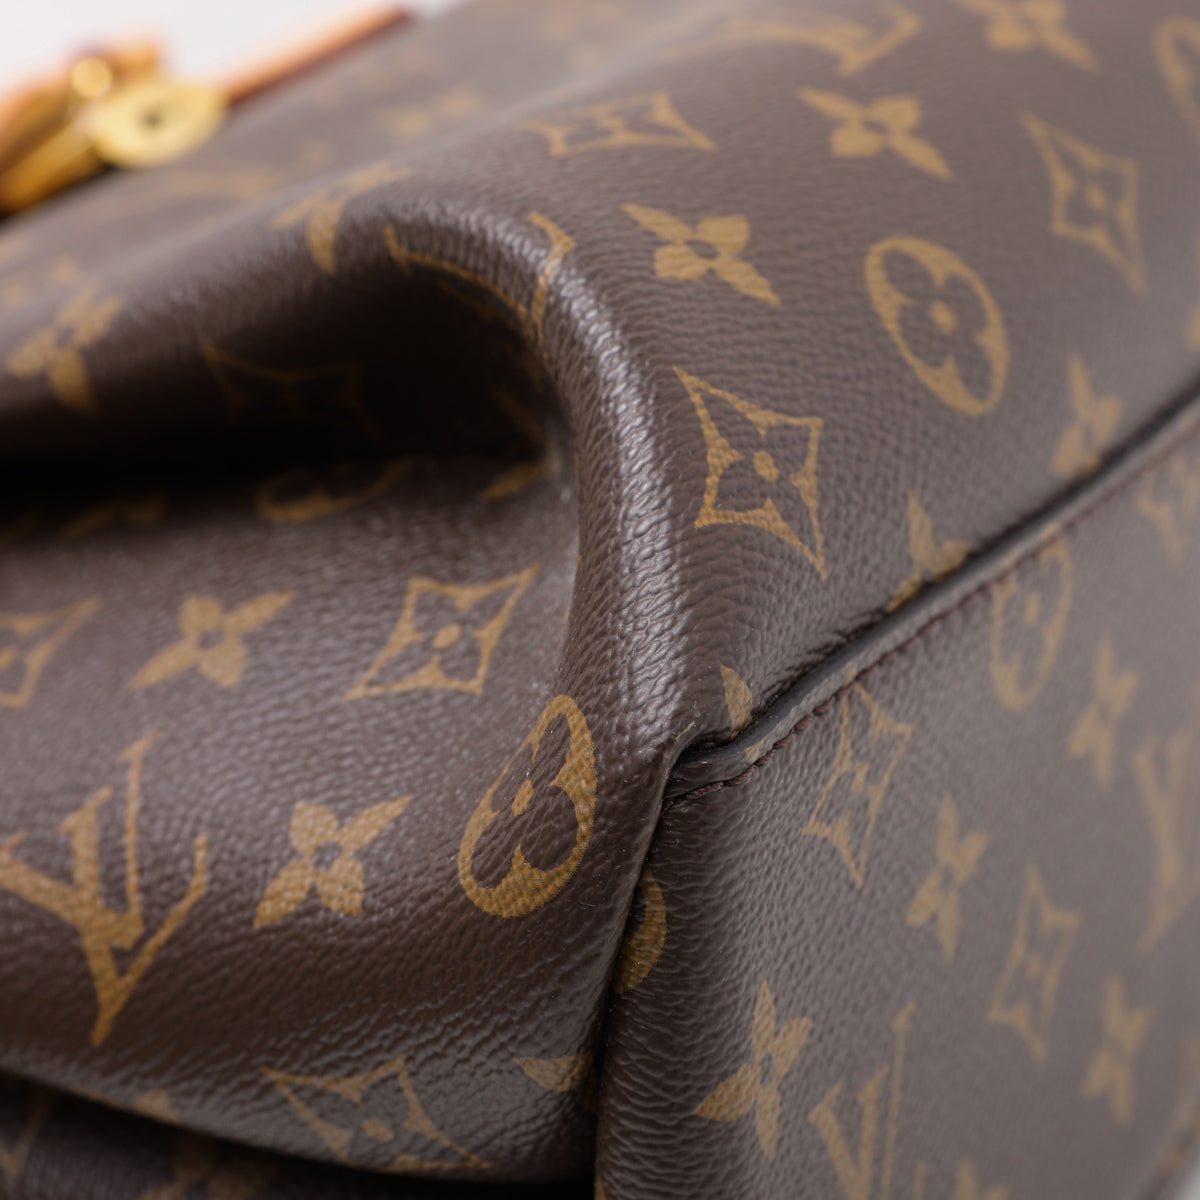 Louis Vuitton - Authenticated Rivoli Handbag - Brown for Women, Very Good Condition